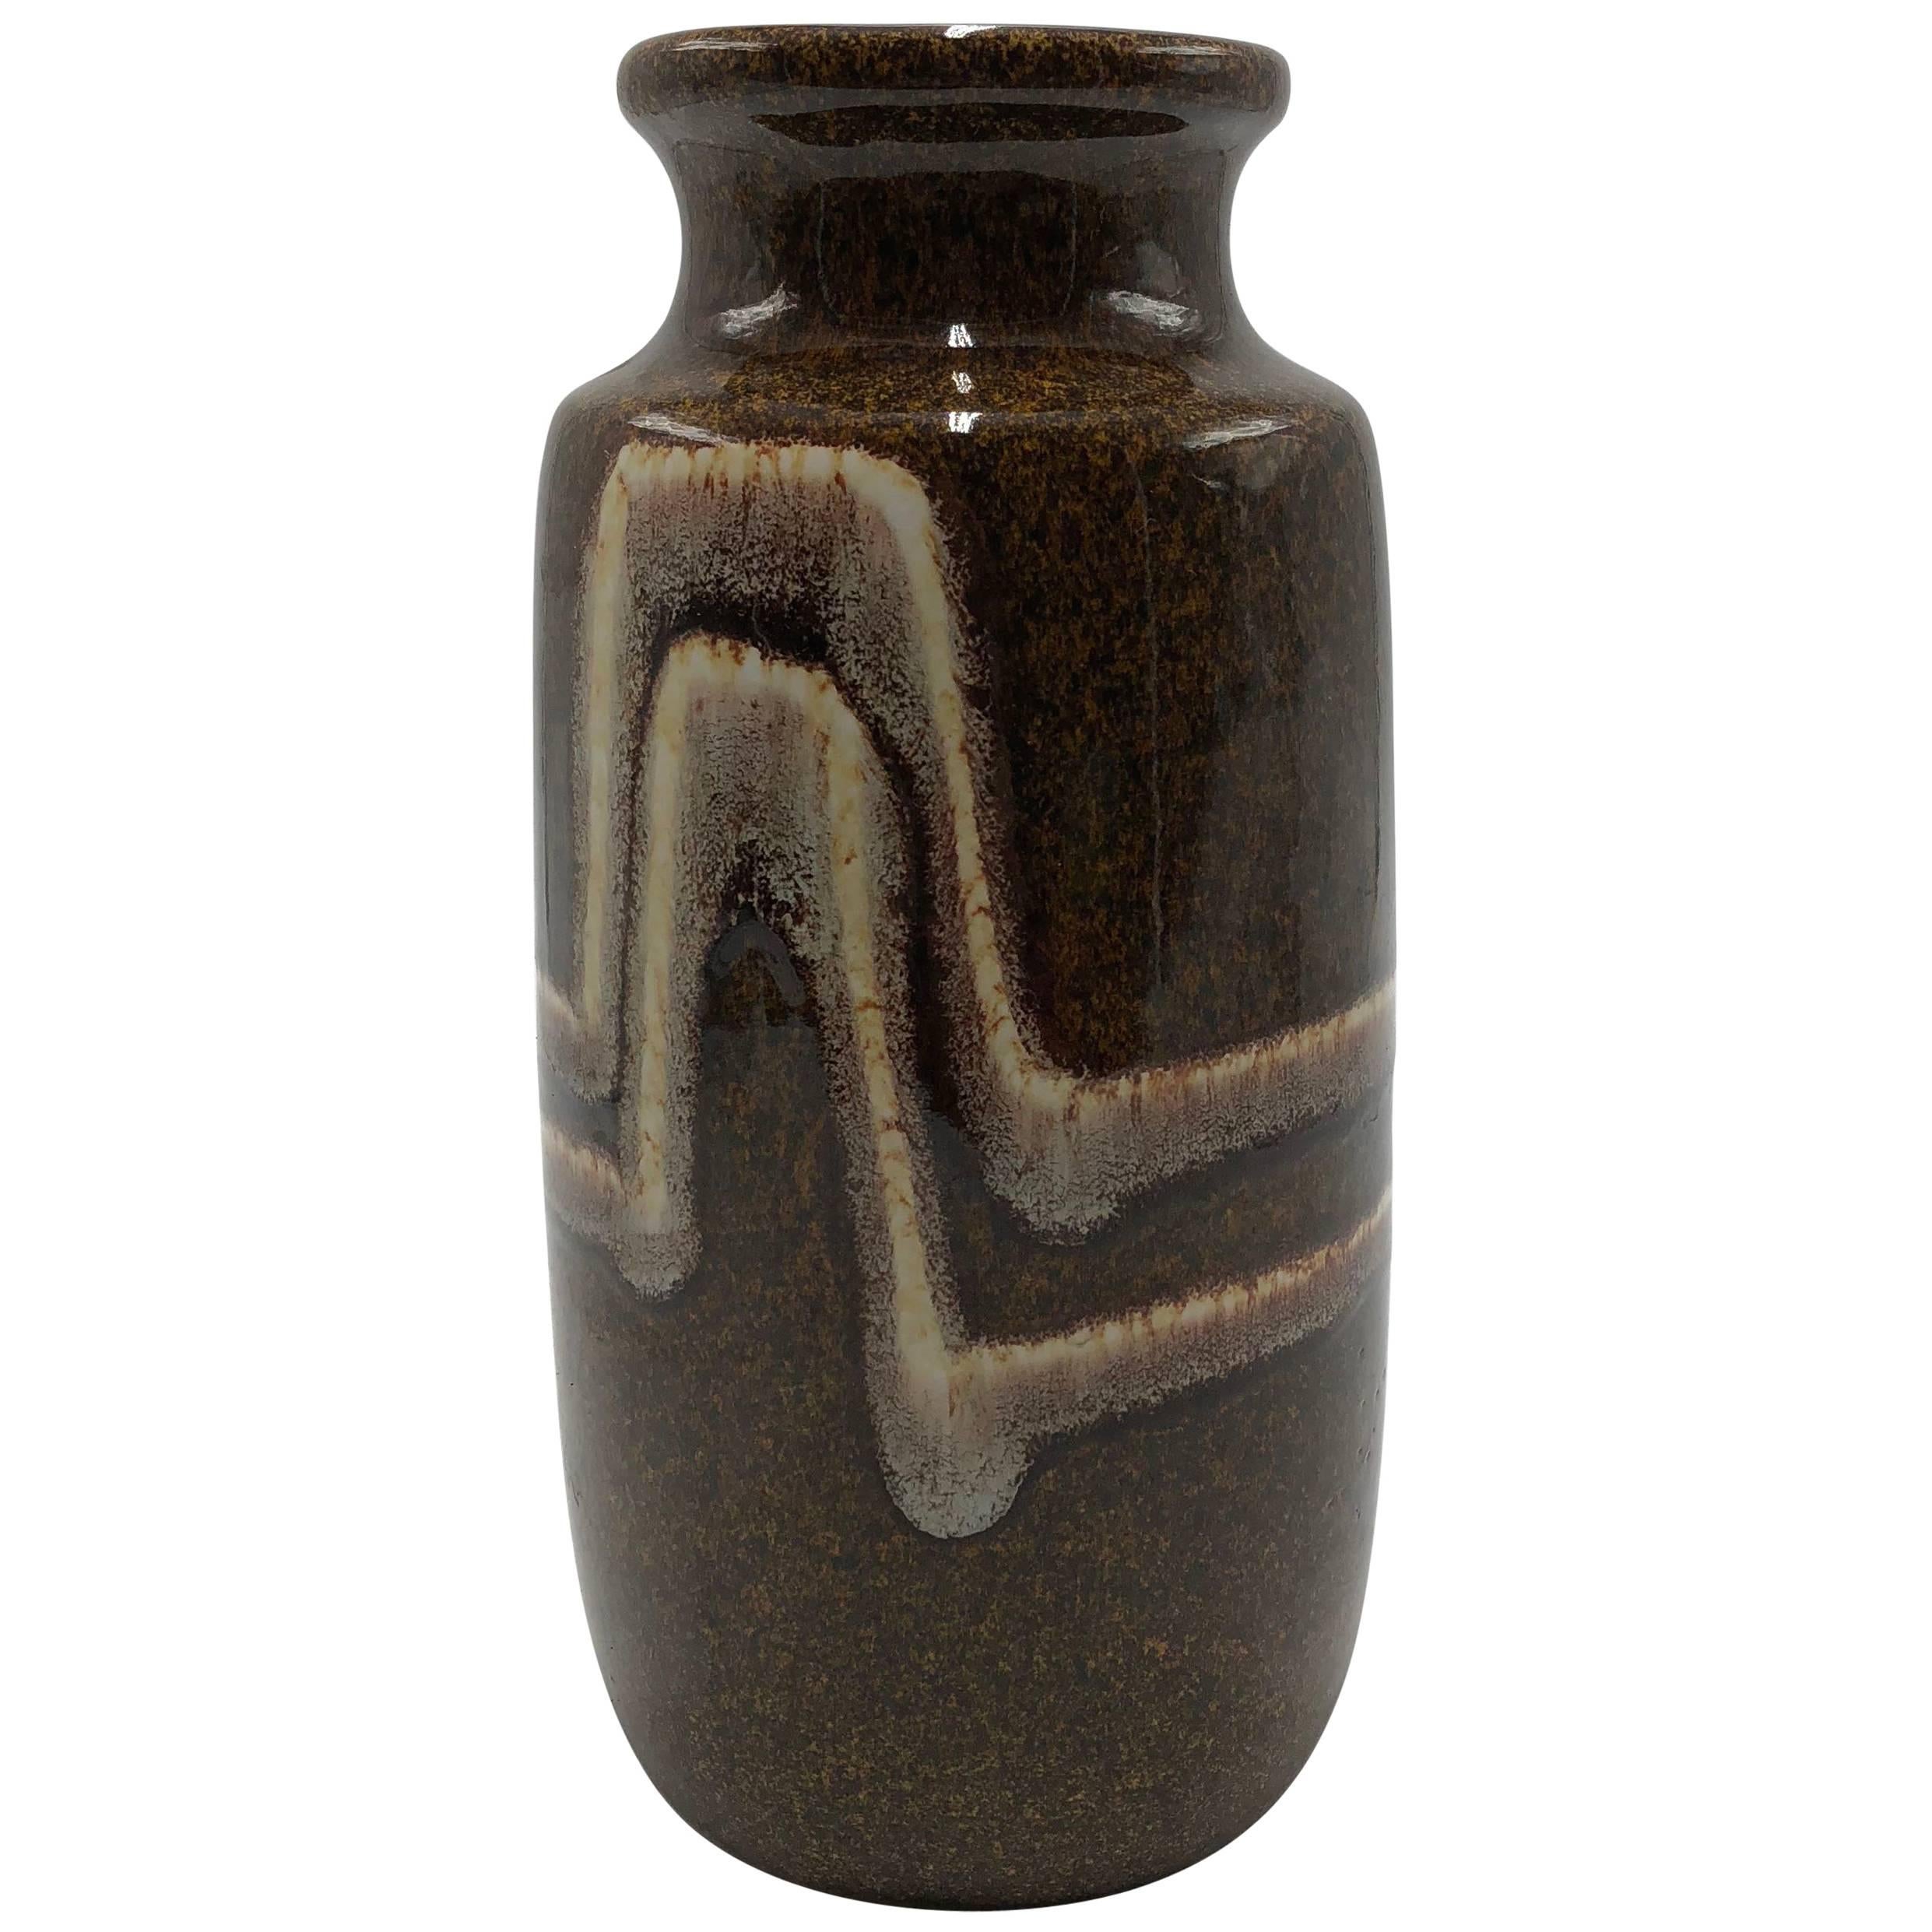 Scheurich Keramik Vase from the 1950s West Germany